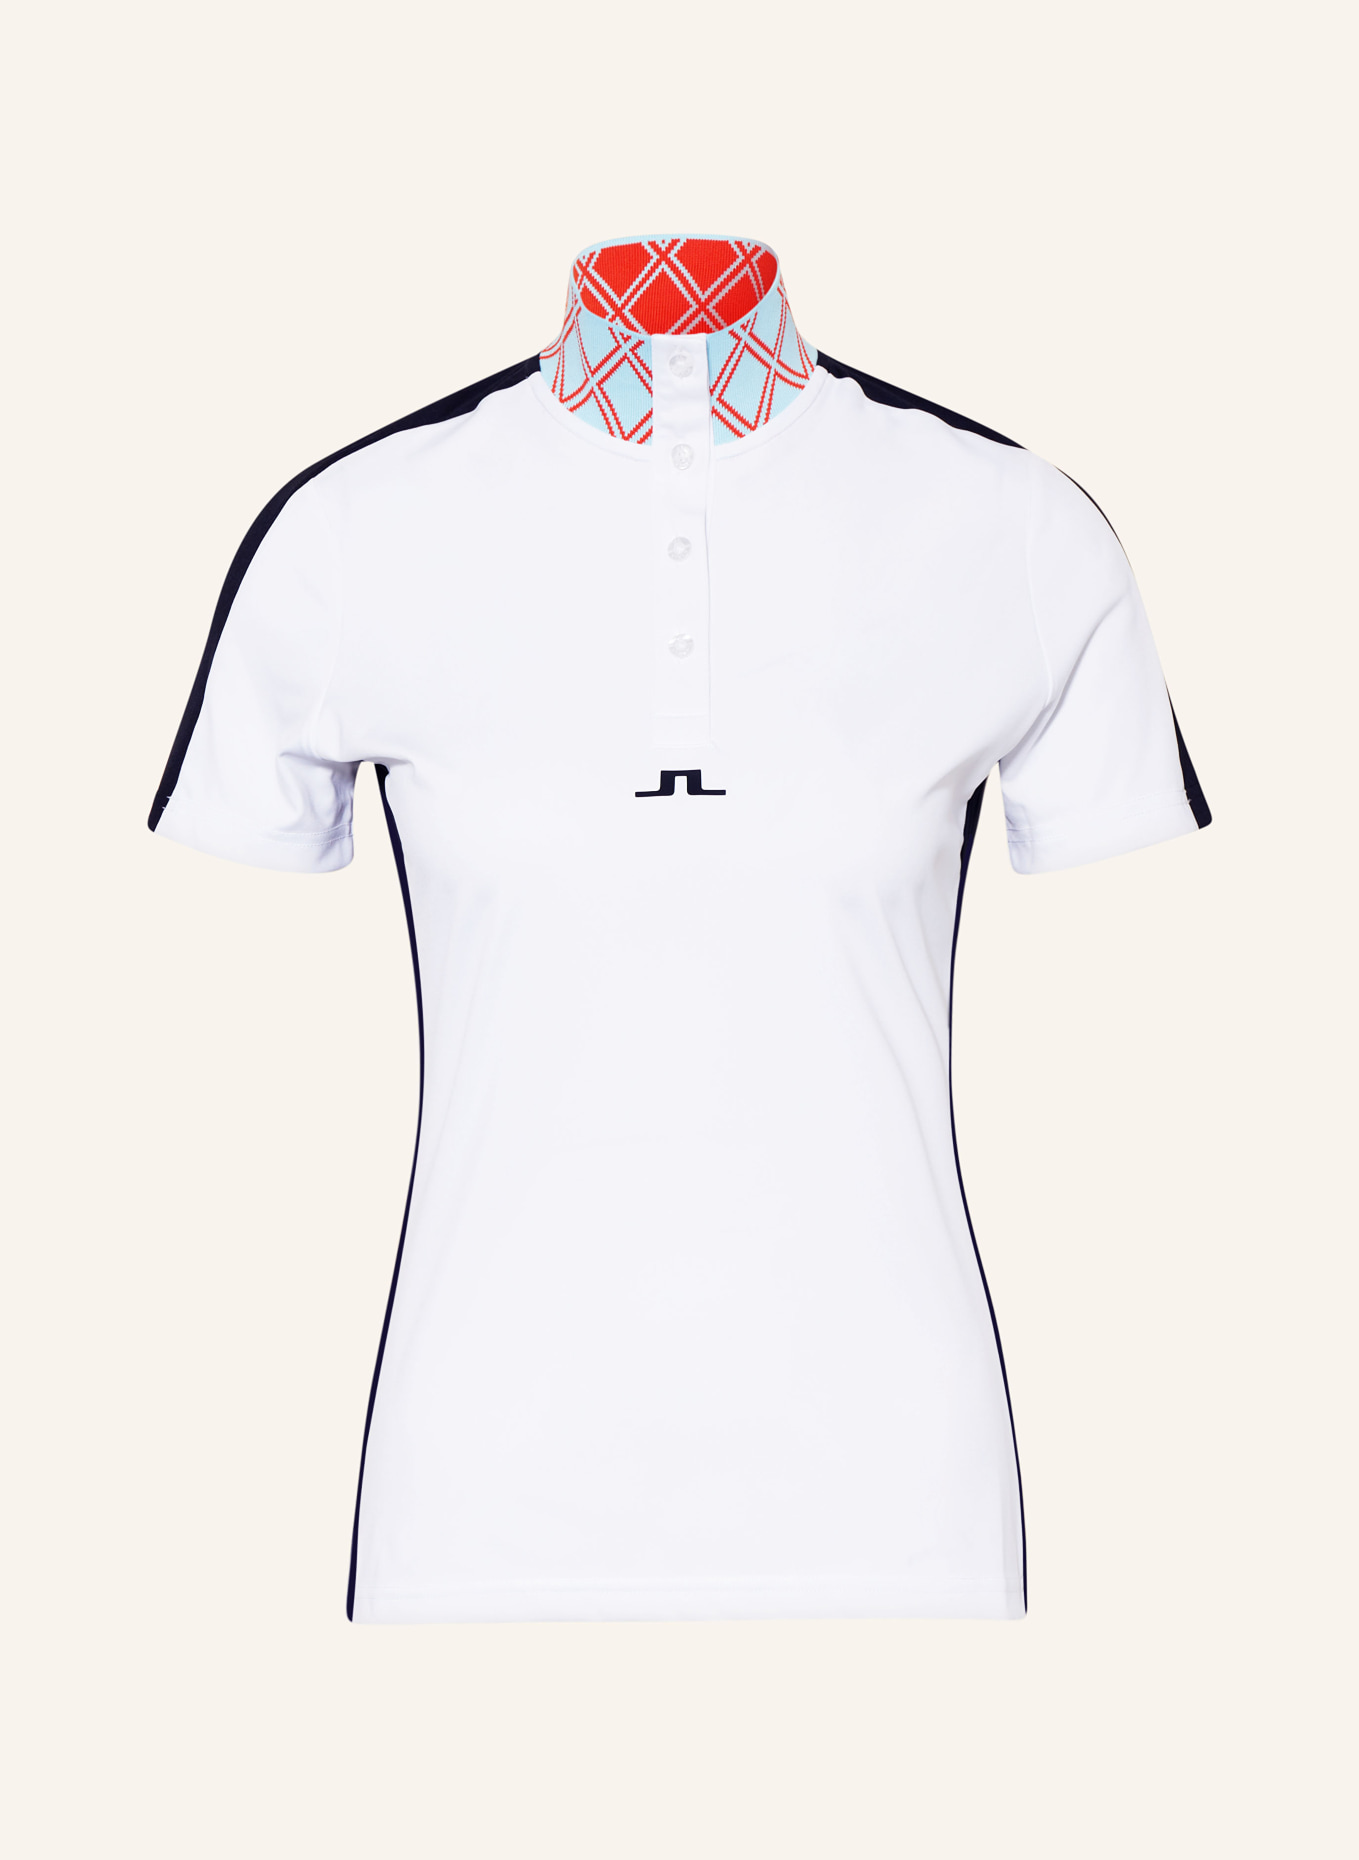 J.LINDEBERG Funktions-Poloshirt, Farbe: WEISS/ SCHWARZ (Bild 1)